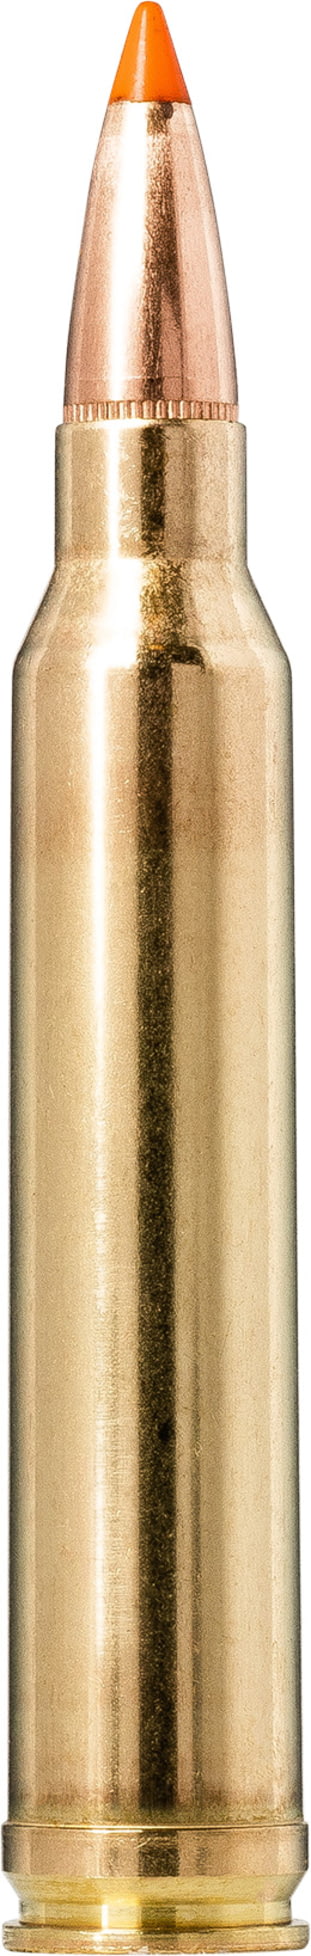 Norma Tipstrike .300 Winchester Magnum 170 Grain Norma Tipstrike Brass Cased Centerfire Rifle Ammunition